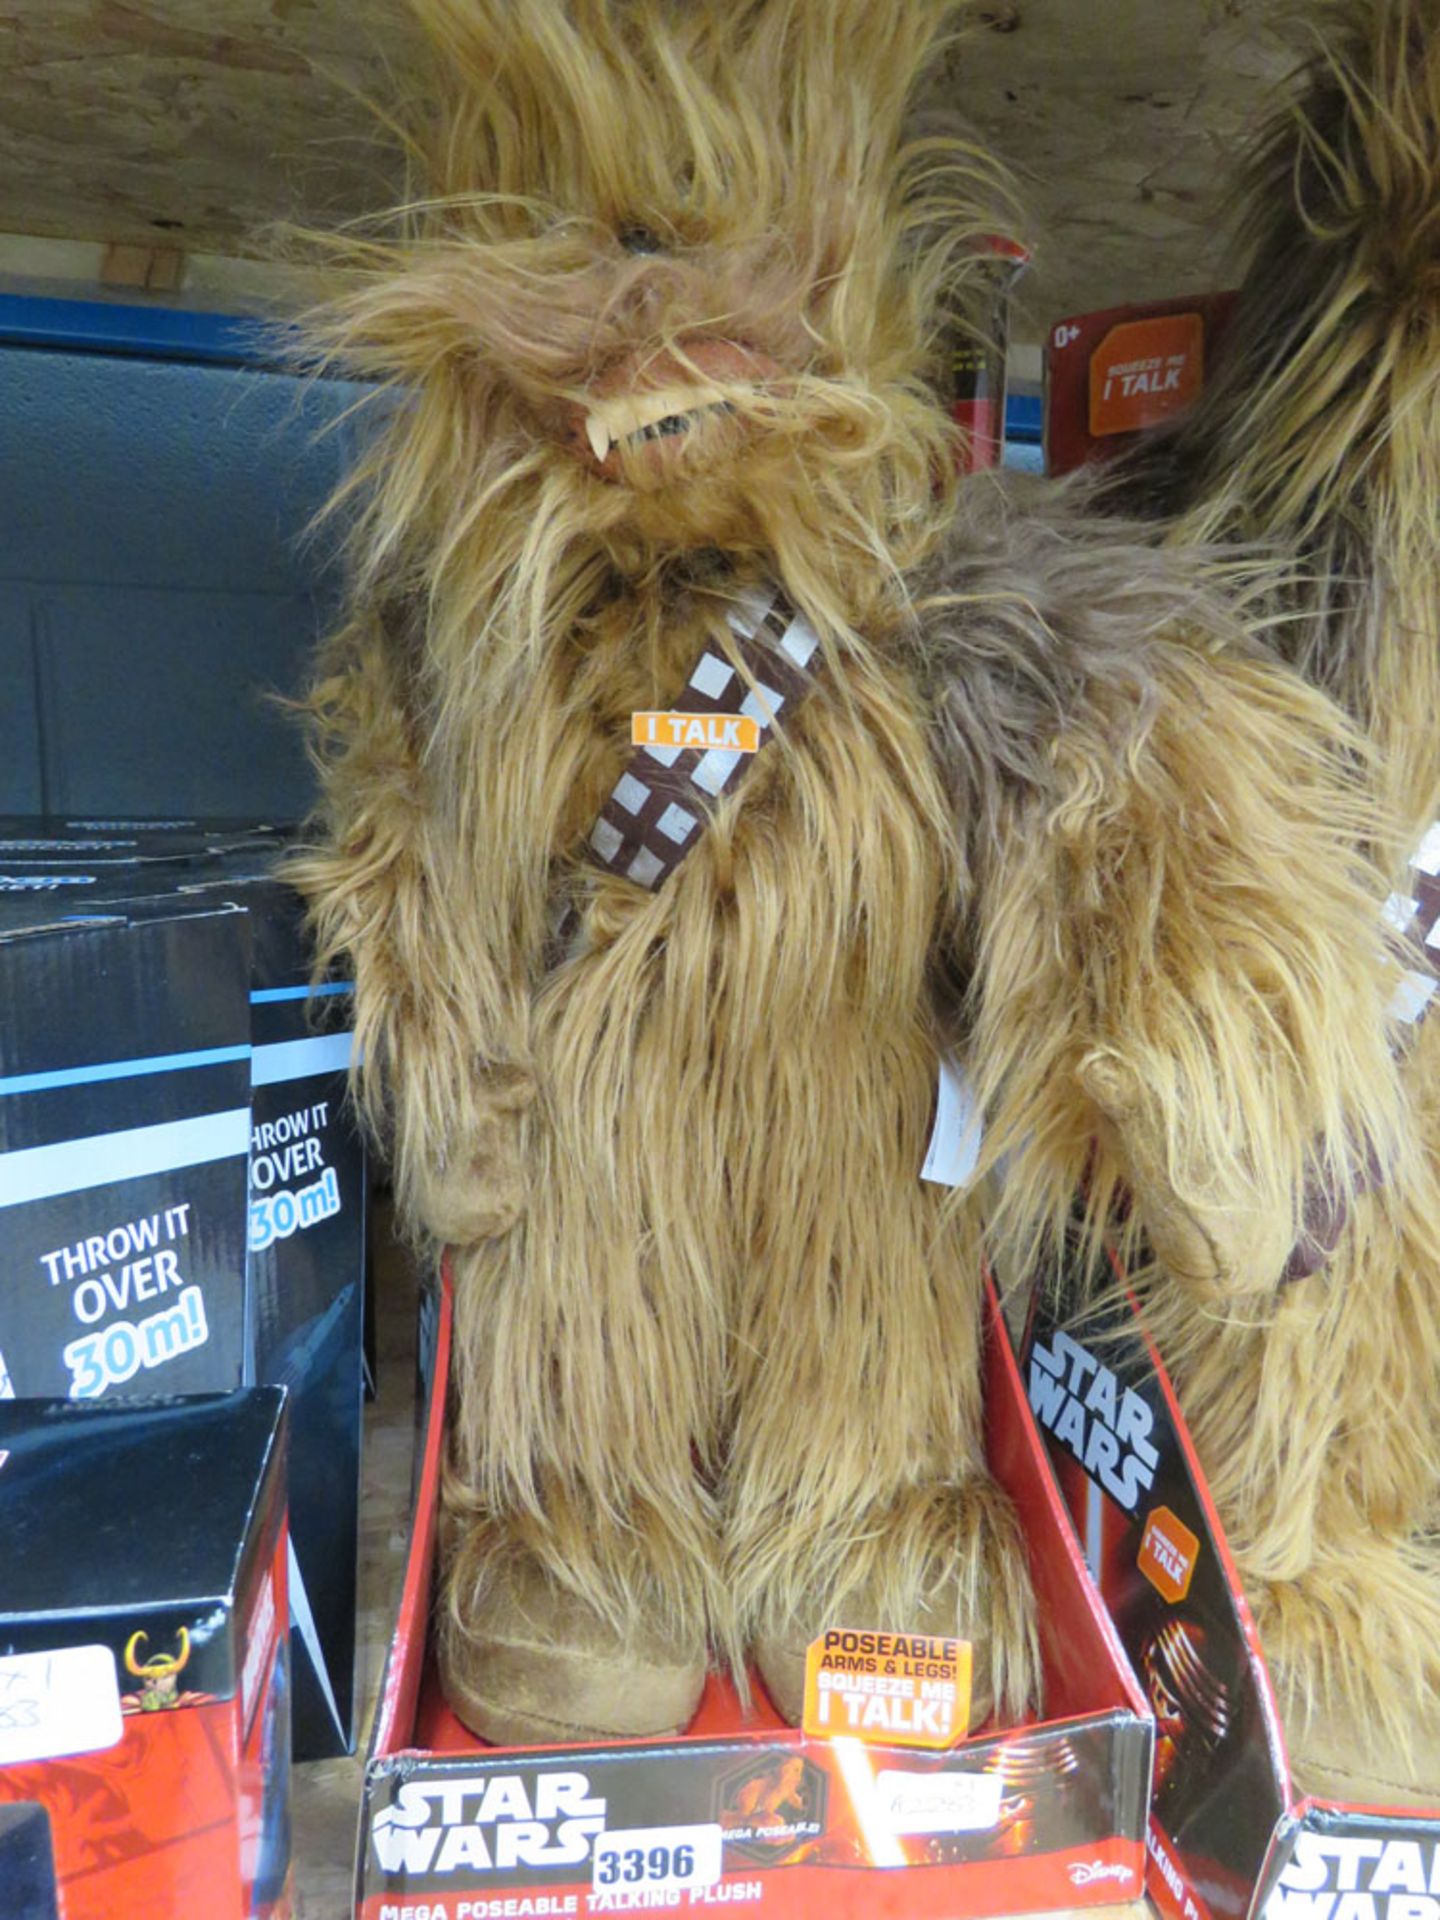 Star Wars Chewbacca mega posable talking plush toy